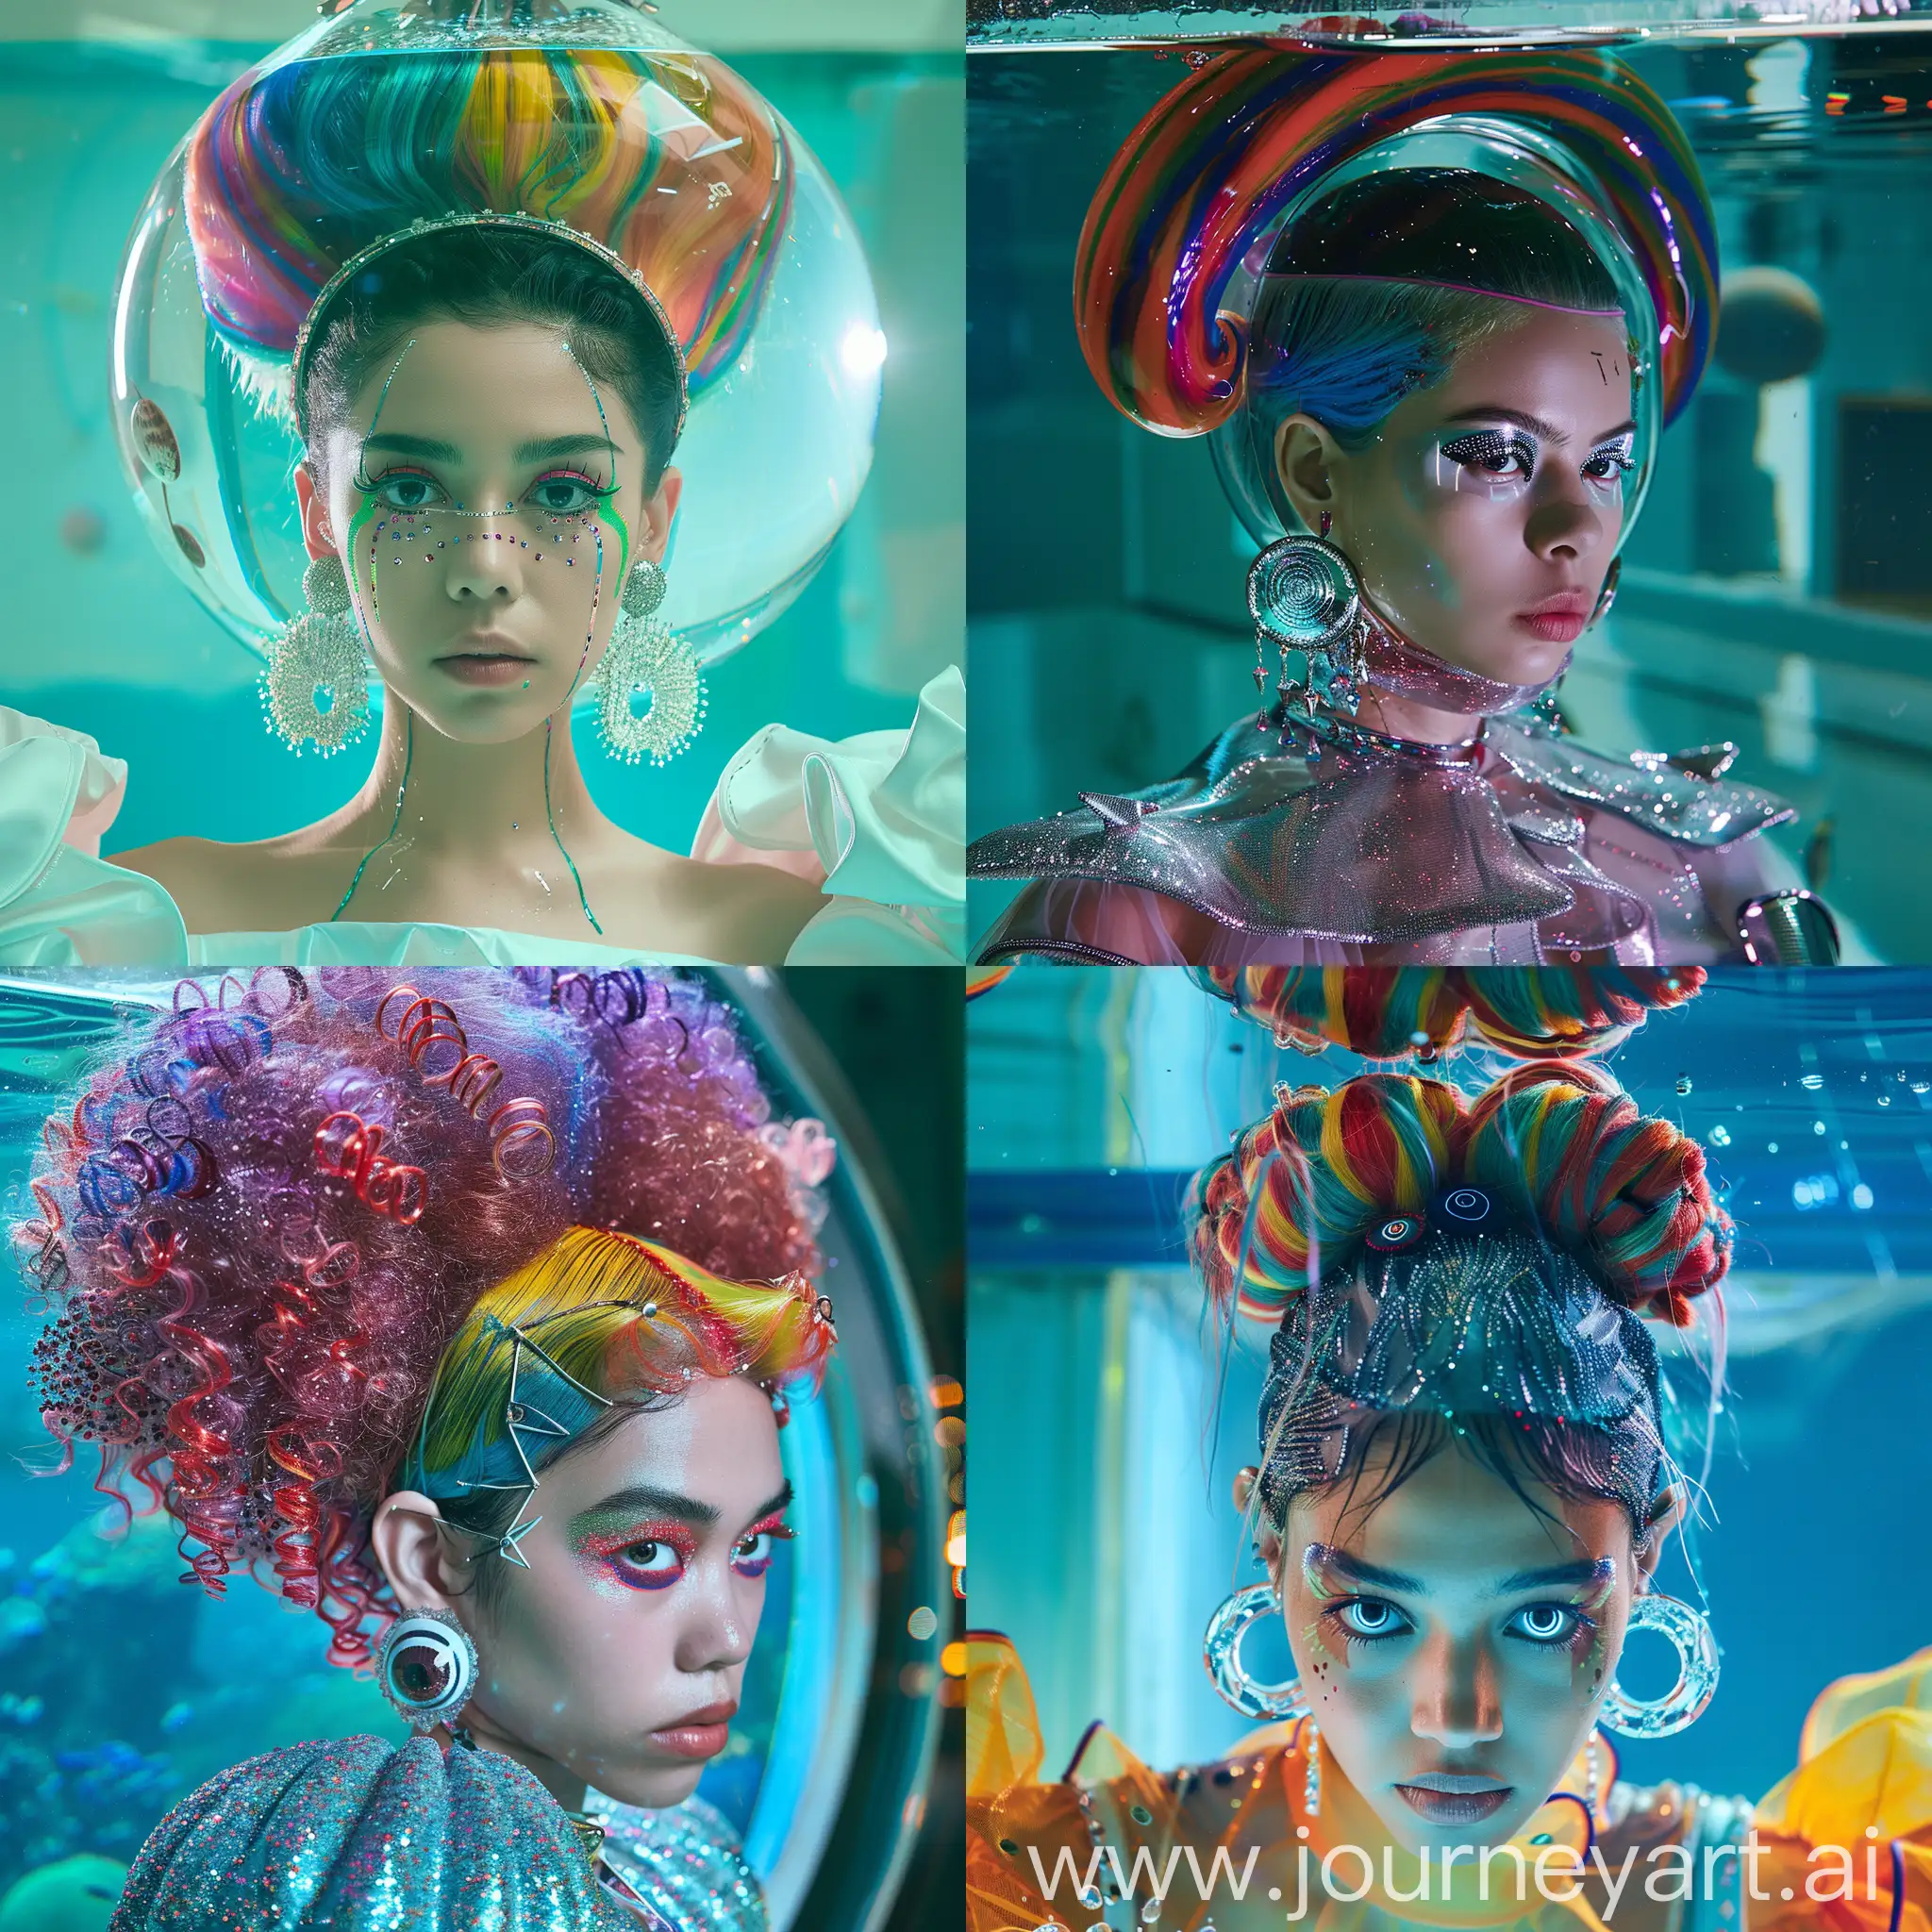 Colorful-Turkish-Girl-with-Futuristic-Balenciaga-Style-in-Yayoi-Kusama-Inspired-Photoshoot